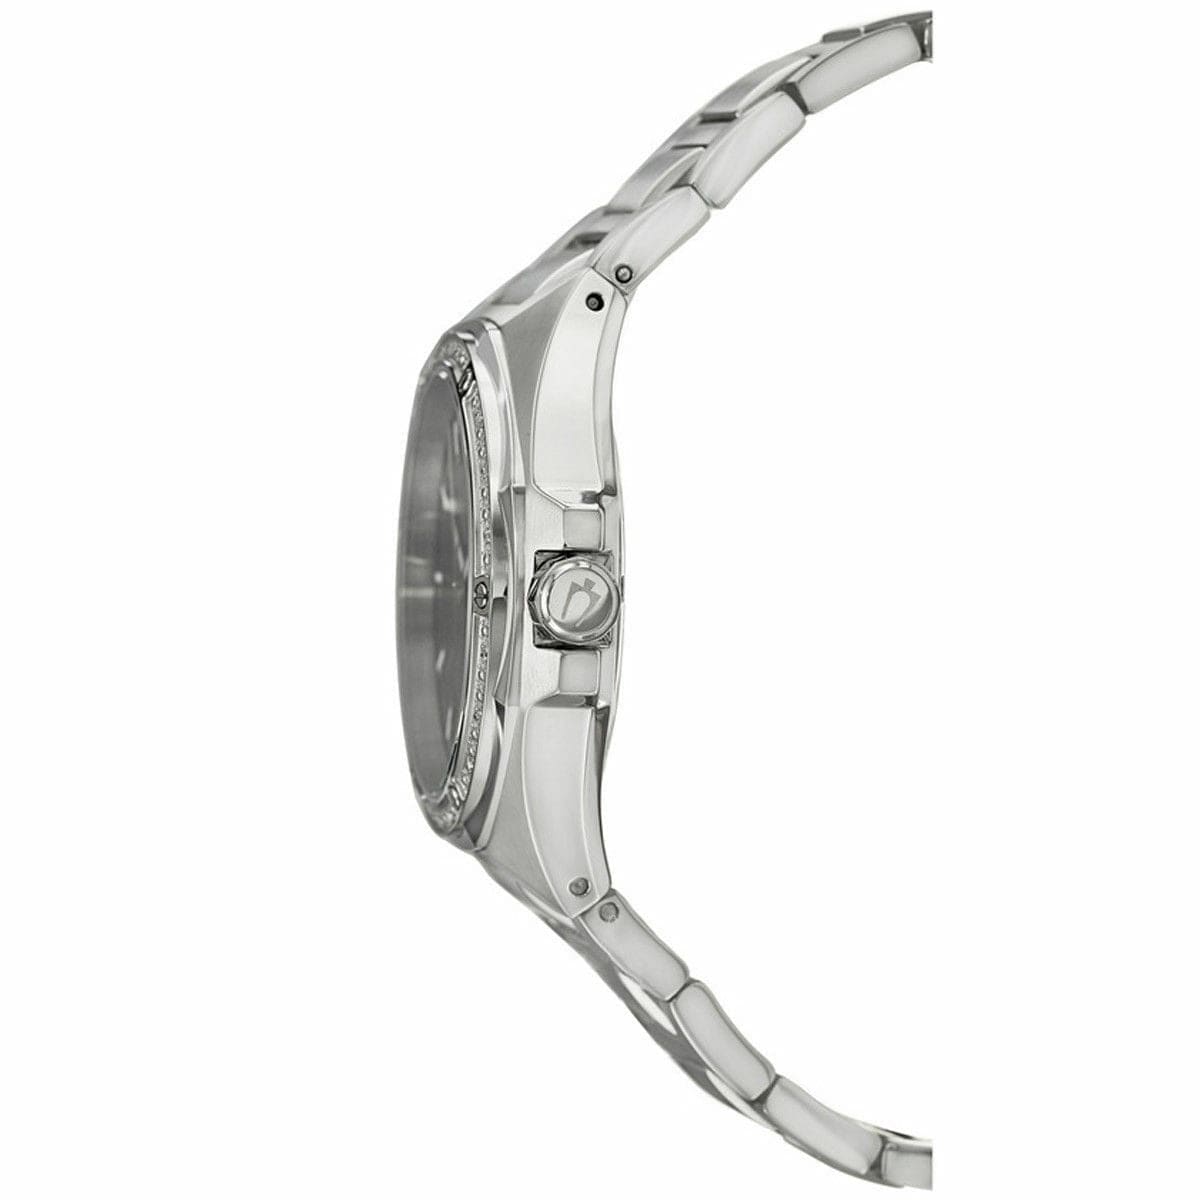 Bulova 96E111 Men's Diamond Grey Dial Stainless Steel Bracelet Date Dress Watch